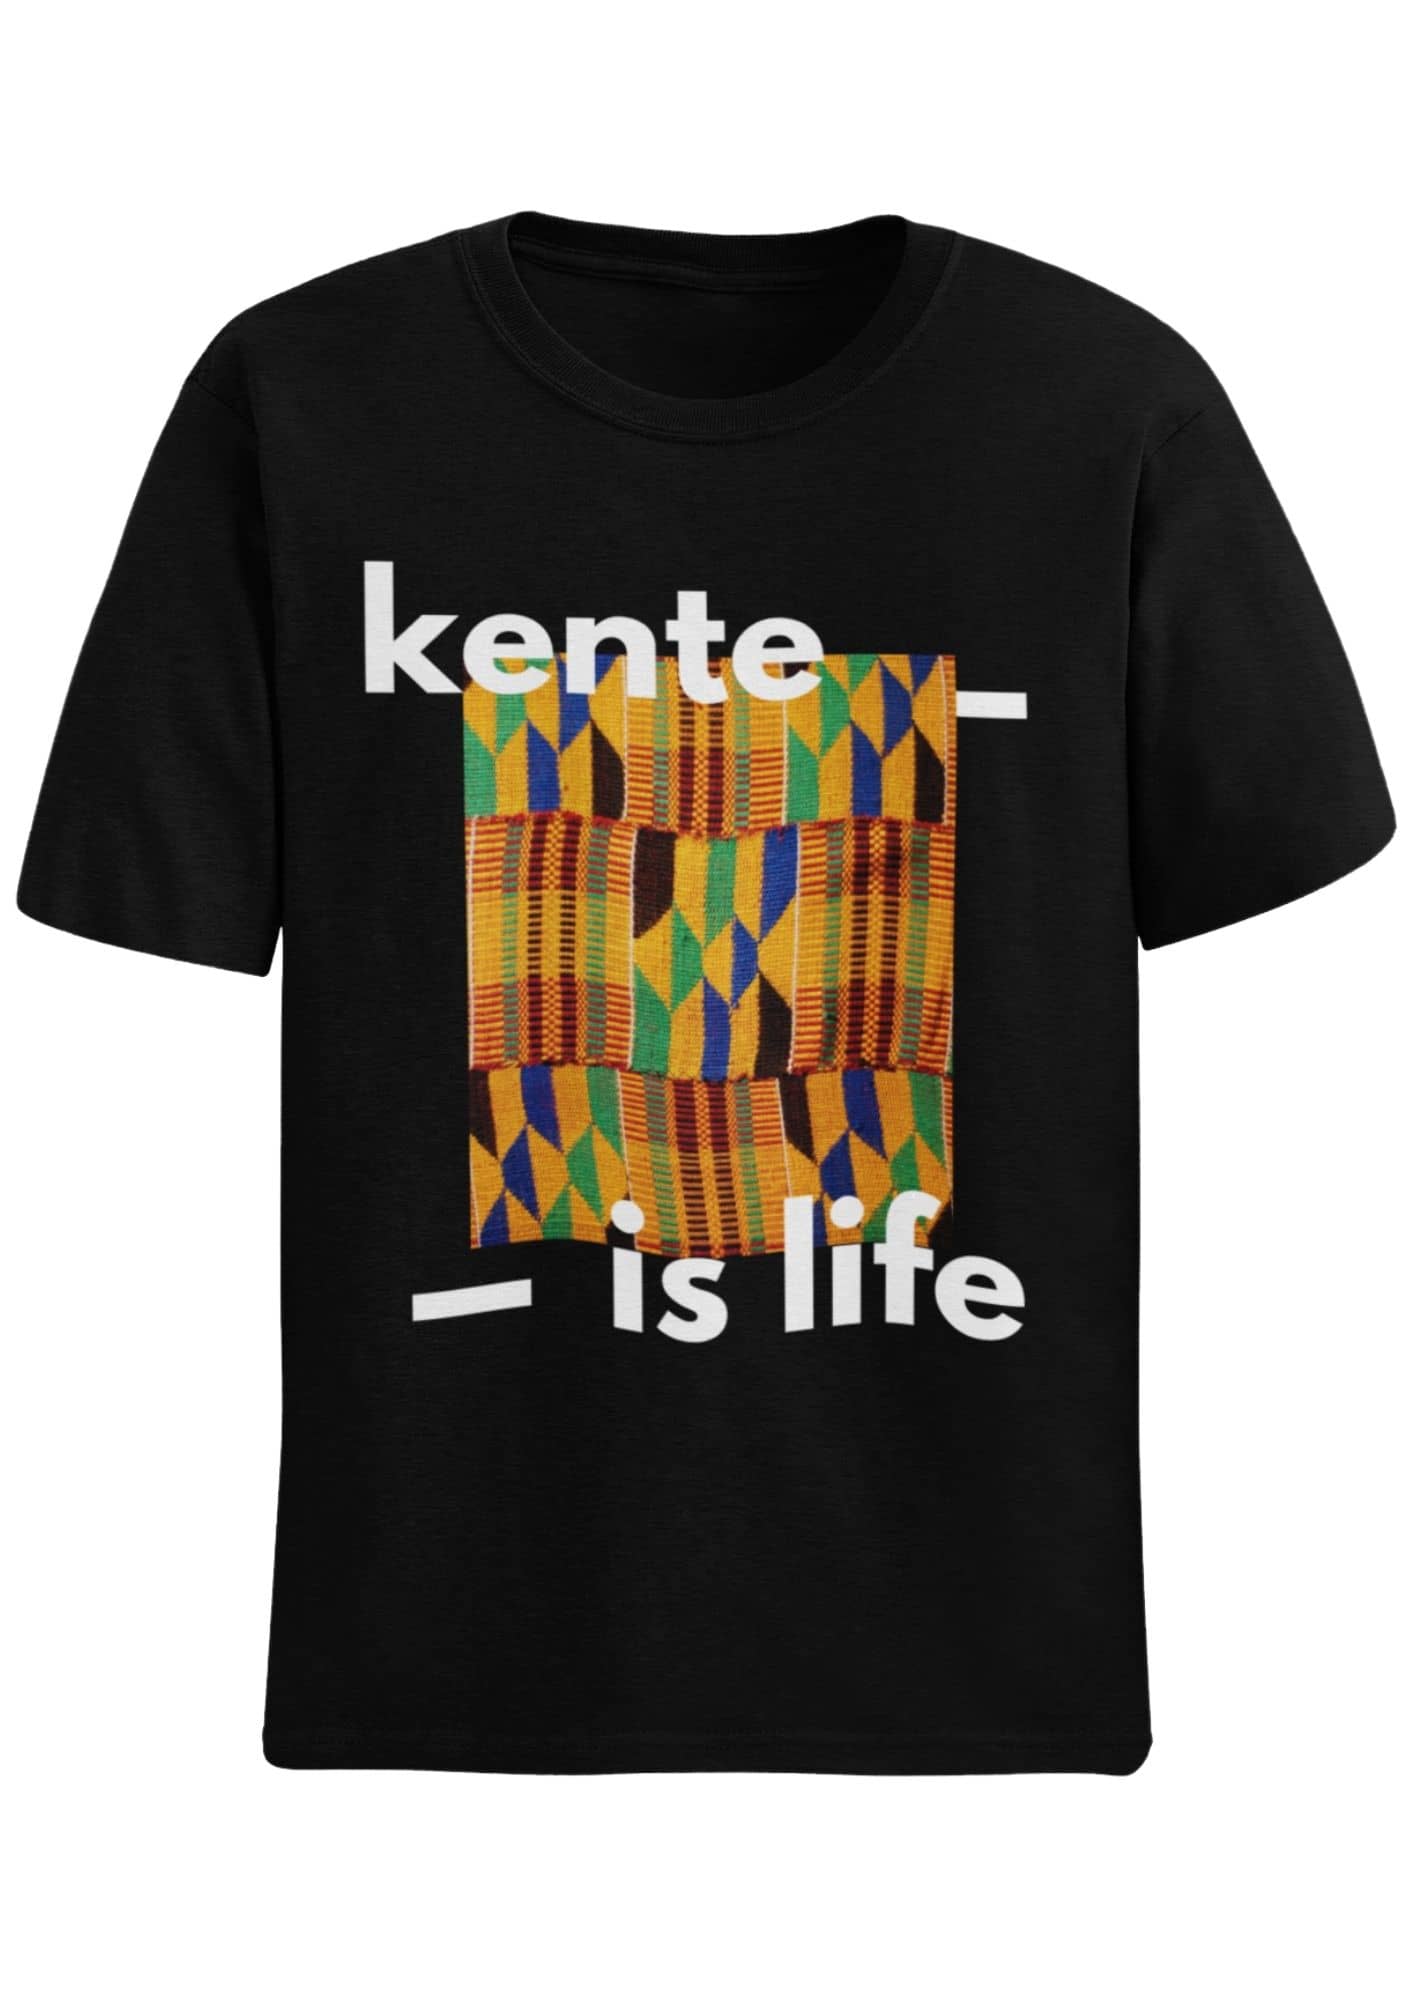 T-shirt kente is life